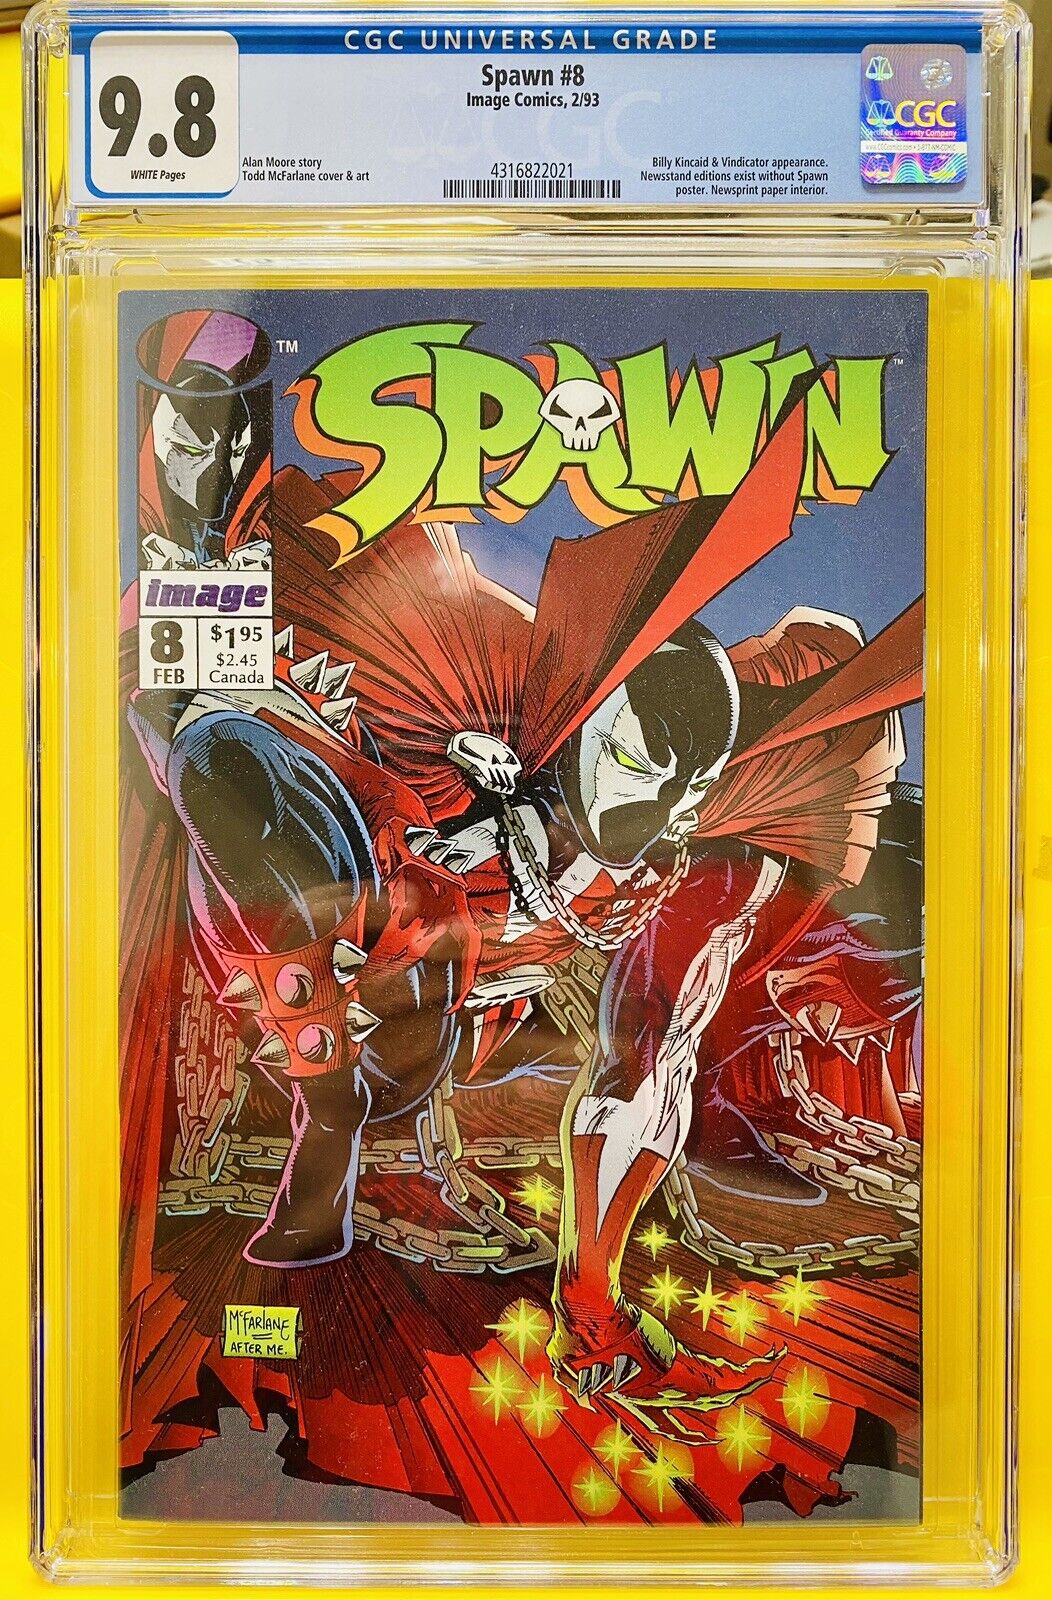 Spawn #8 (1993) CGC 9.8 by Image Comics (Todd McFarlane)